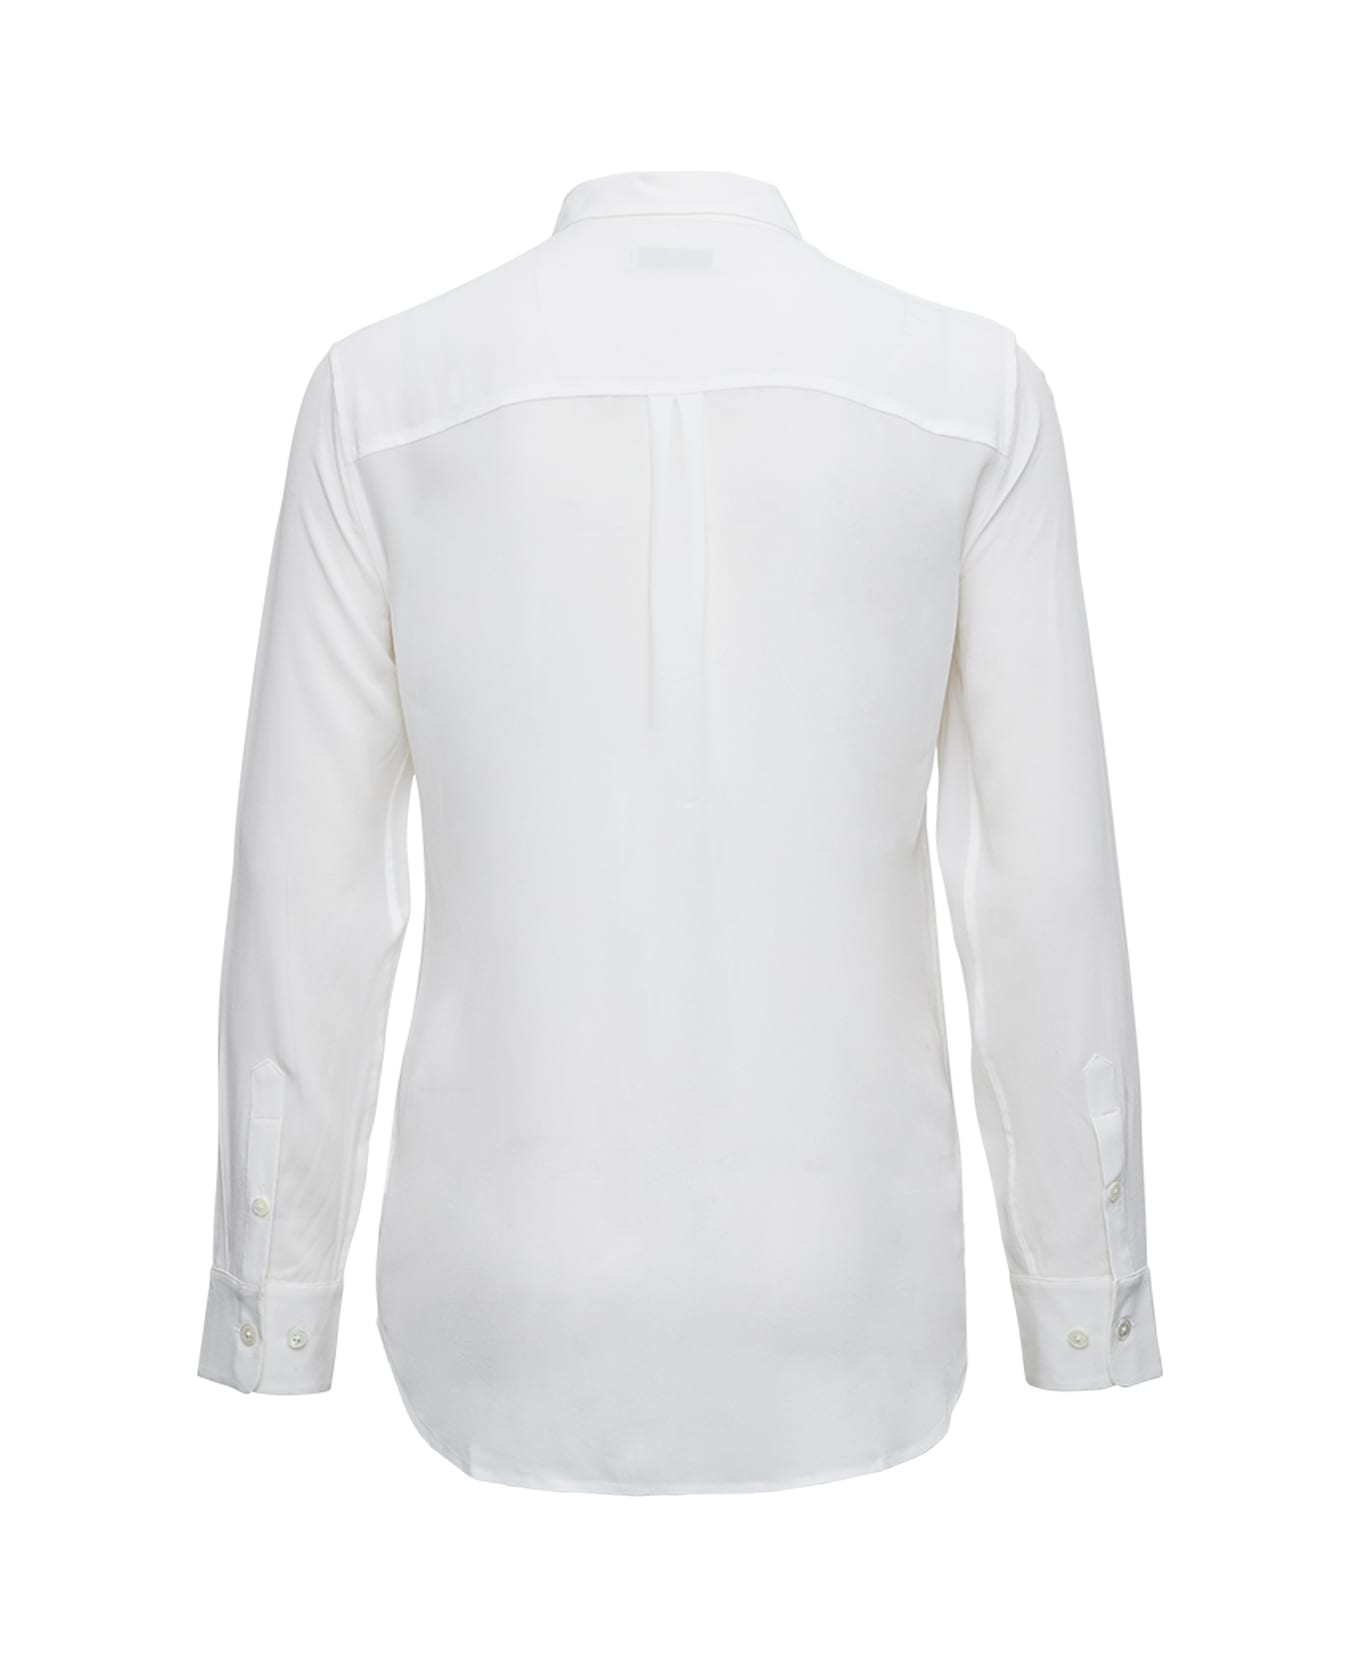 Equipment White Silk Shirt With Pockets シャツ